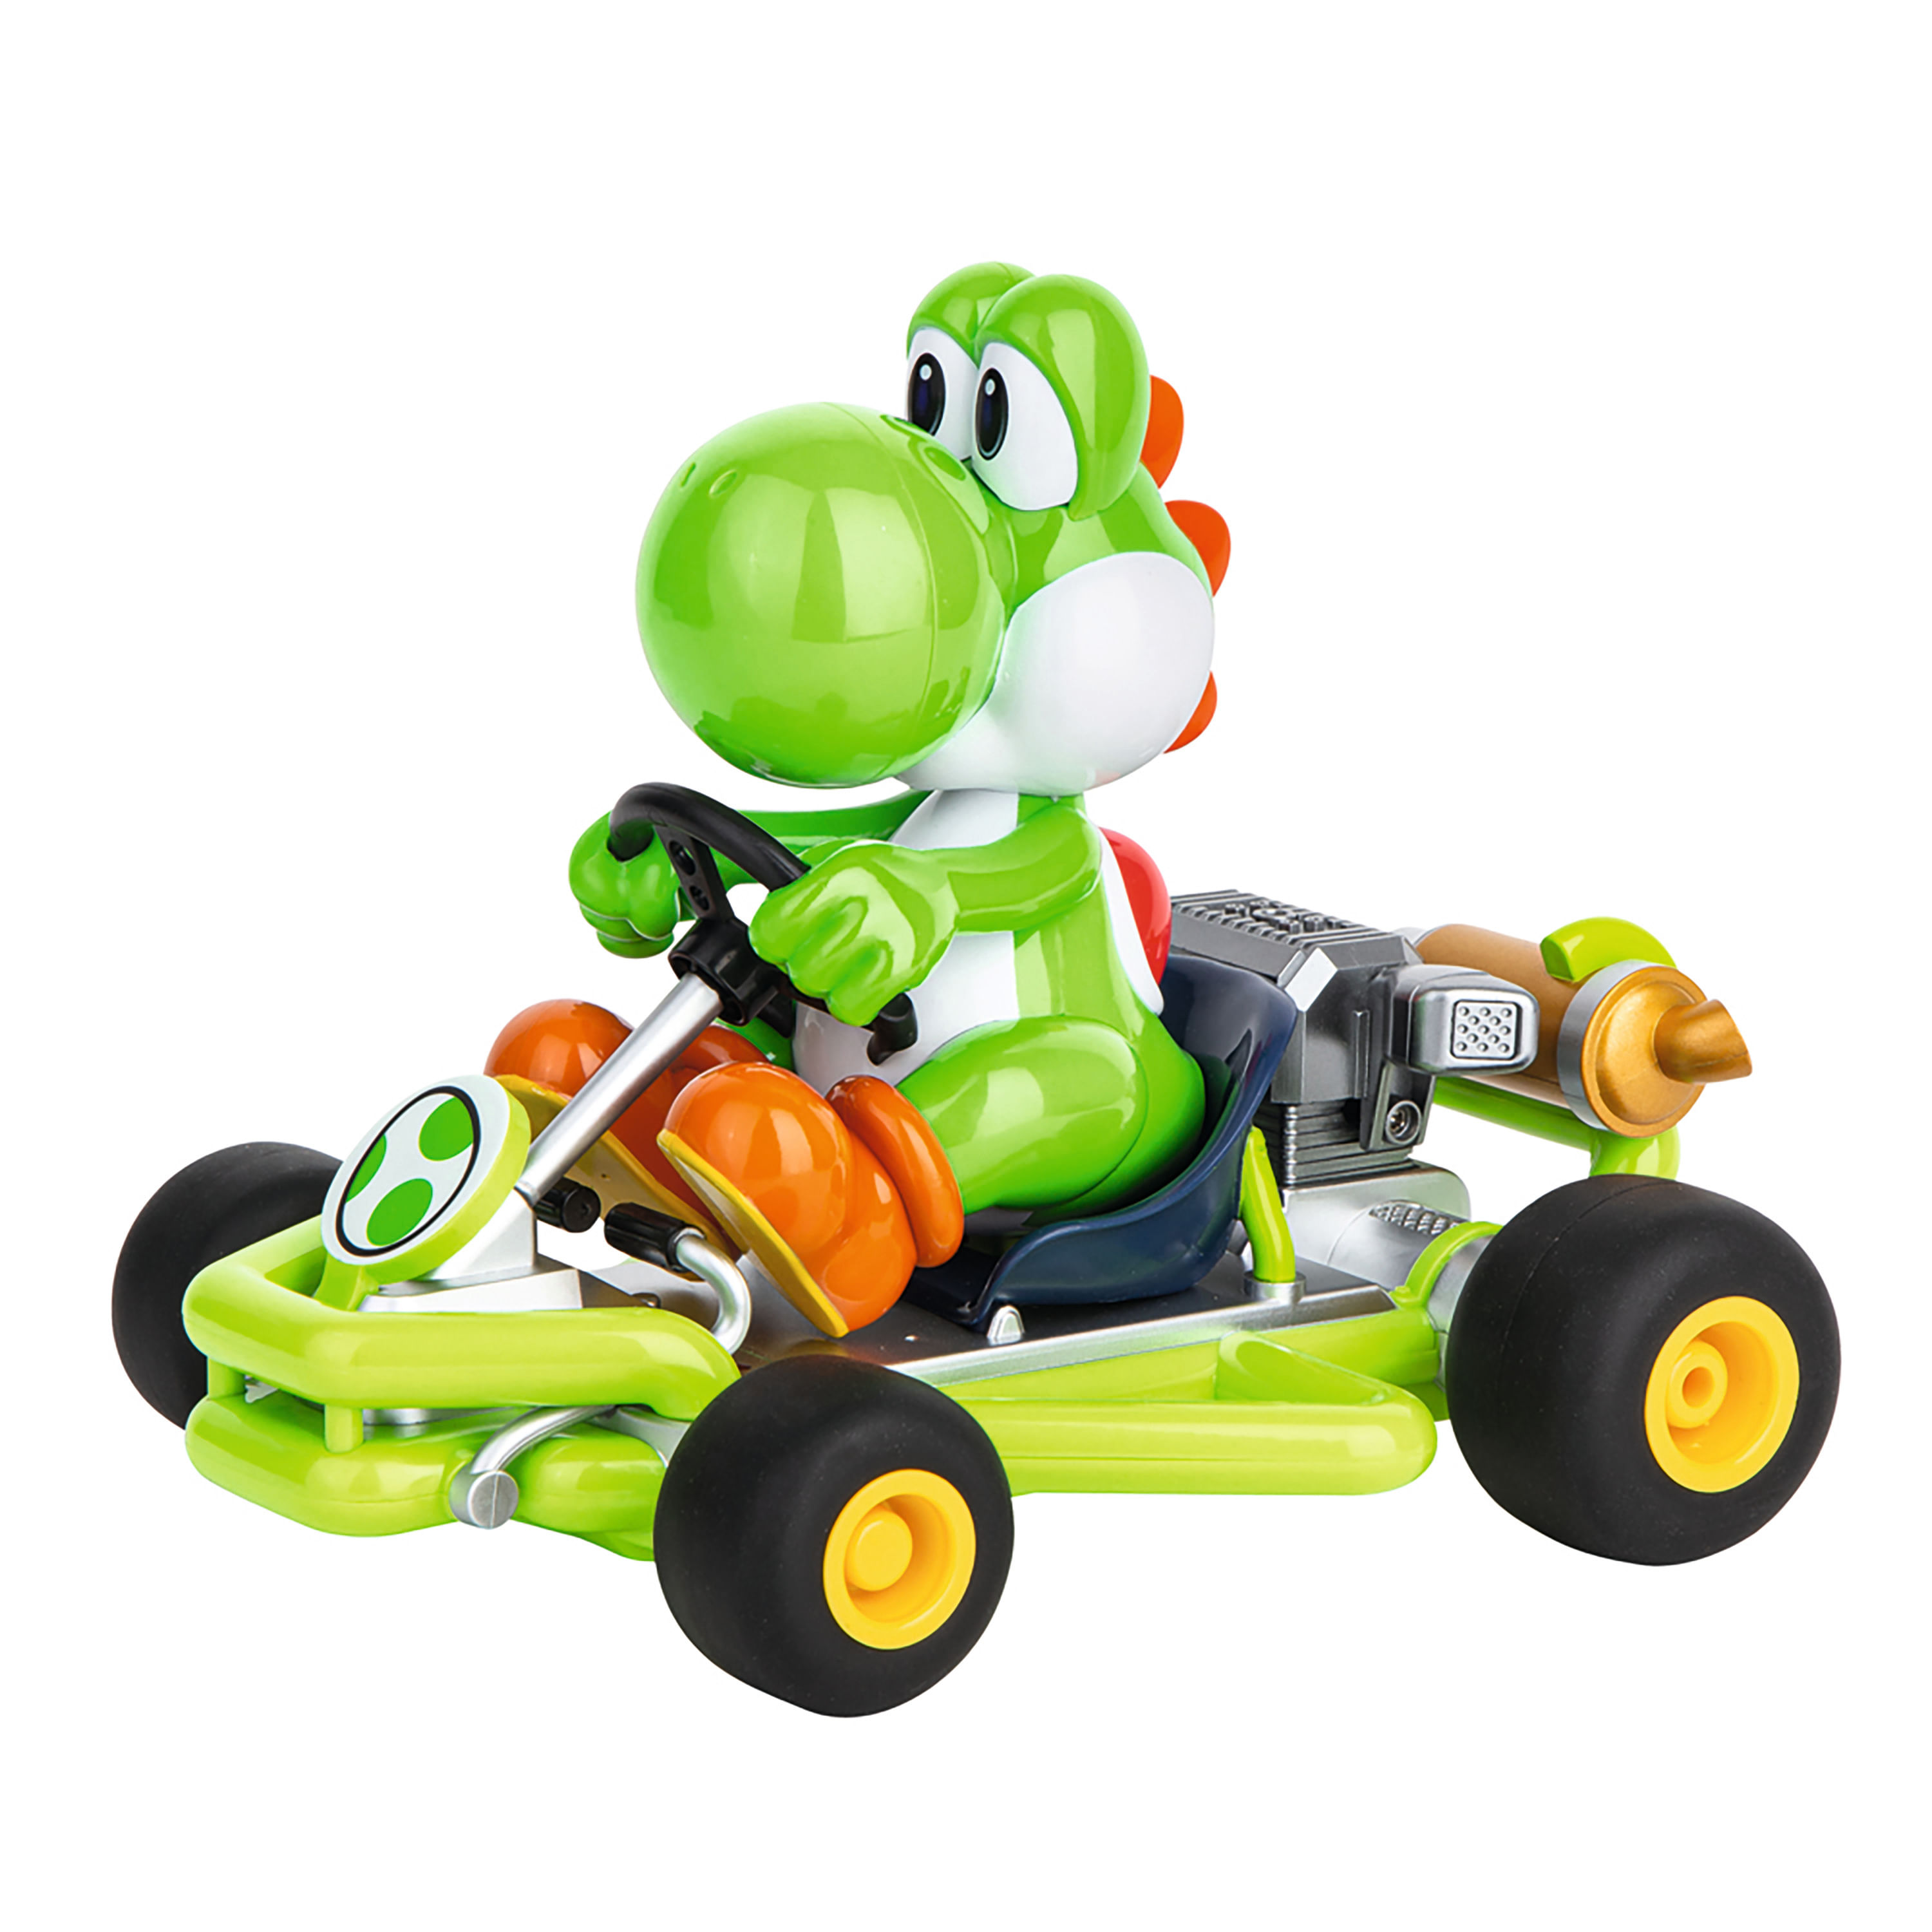 Veh-culo-Rc-Mario-Kart-Yoshi-1-89554